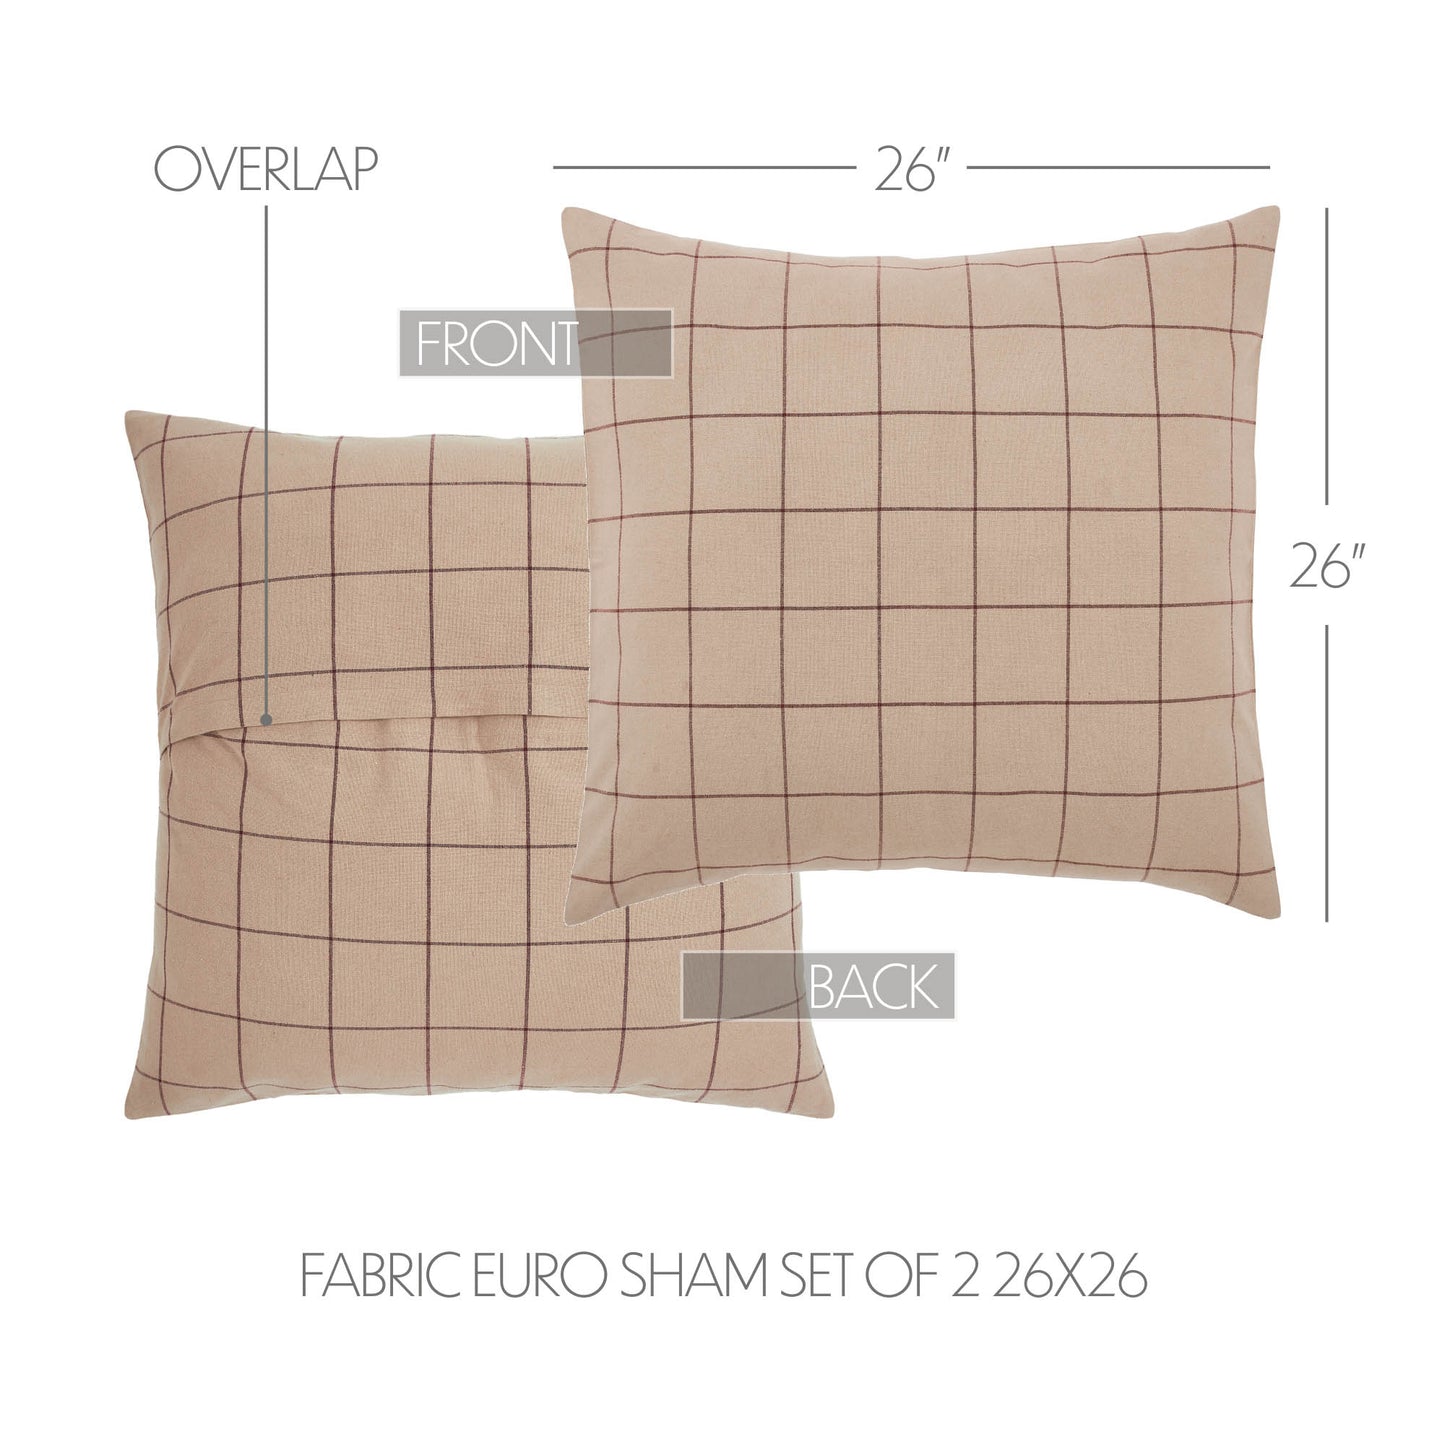 Connell Fabric Euro Sham Set of 2 26x26 SpadezStore